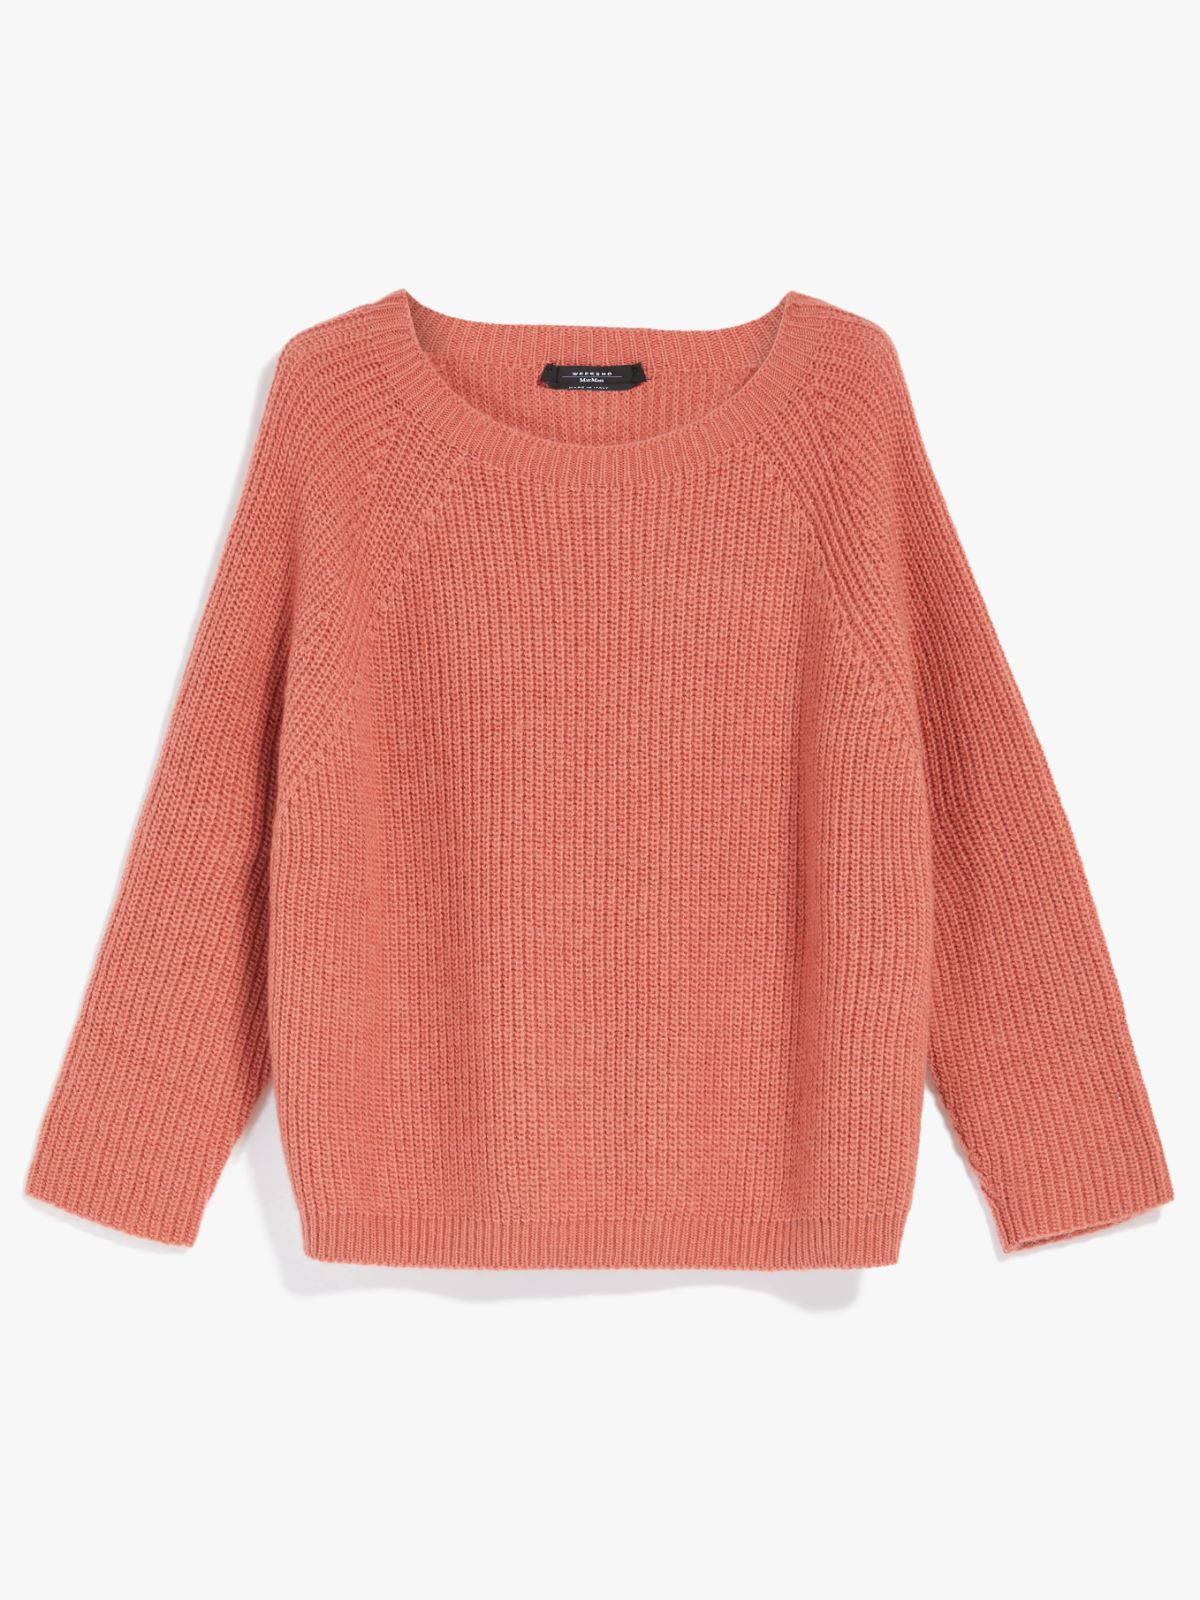 Mohair yarn sweater - ANTIQUE ROSE - Weekend Max Mara - 6